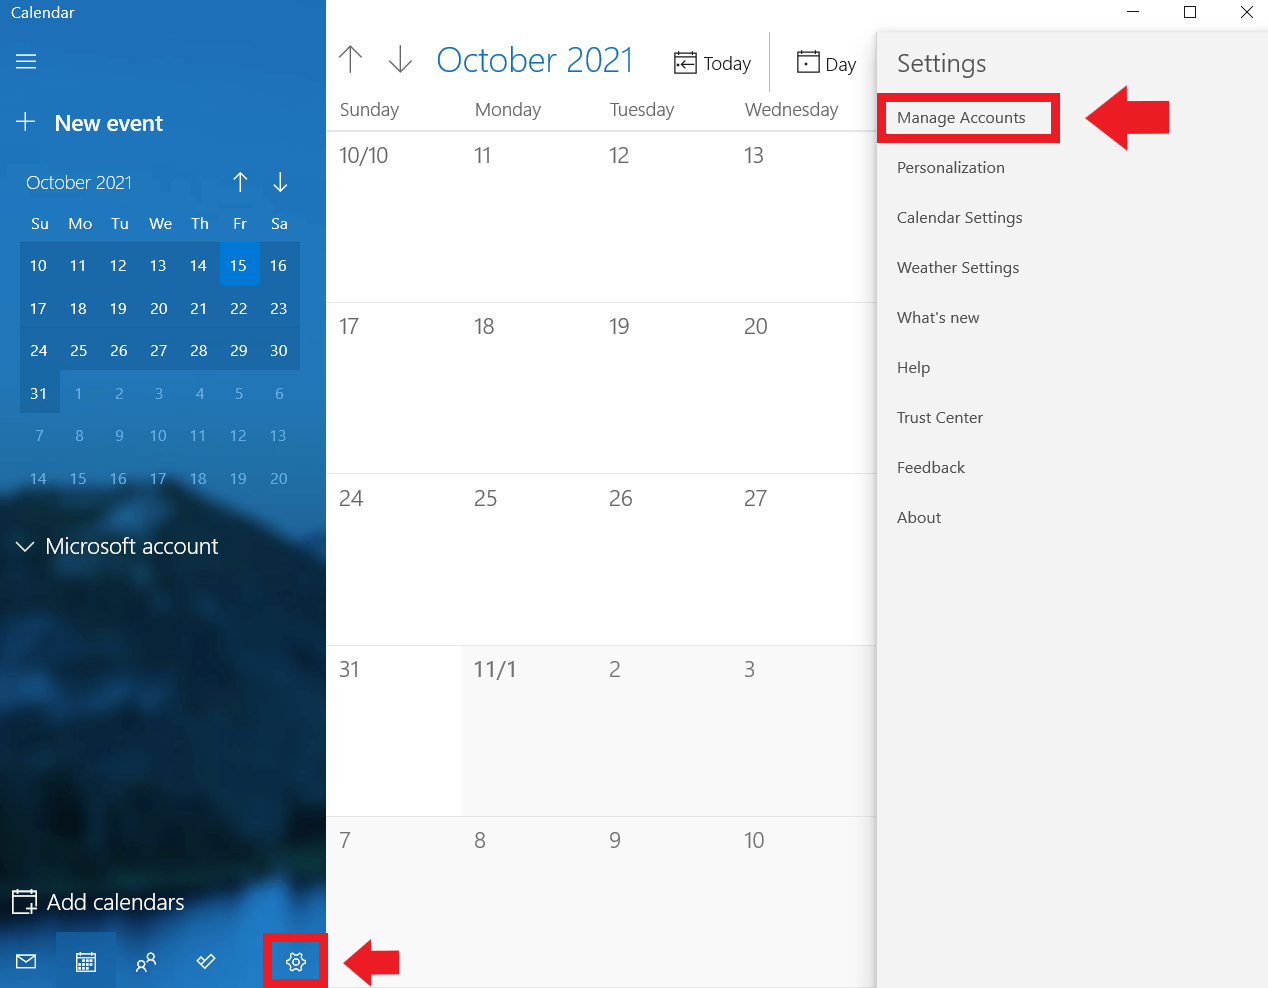 Windows calendar: “Settings”, “Manage accounts”